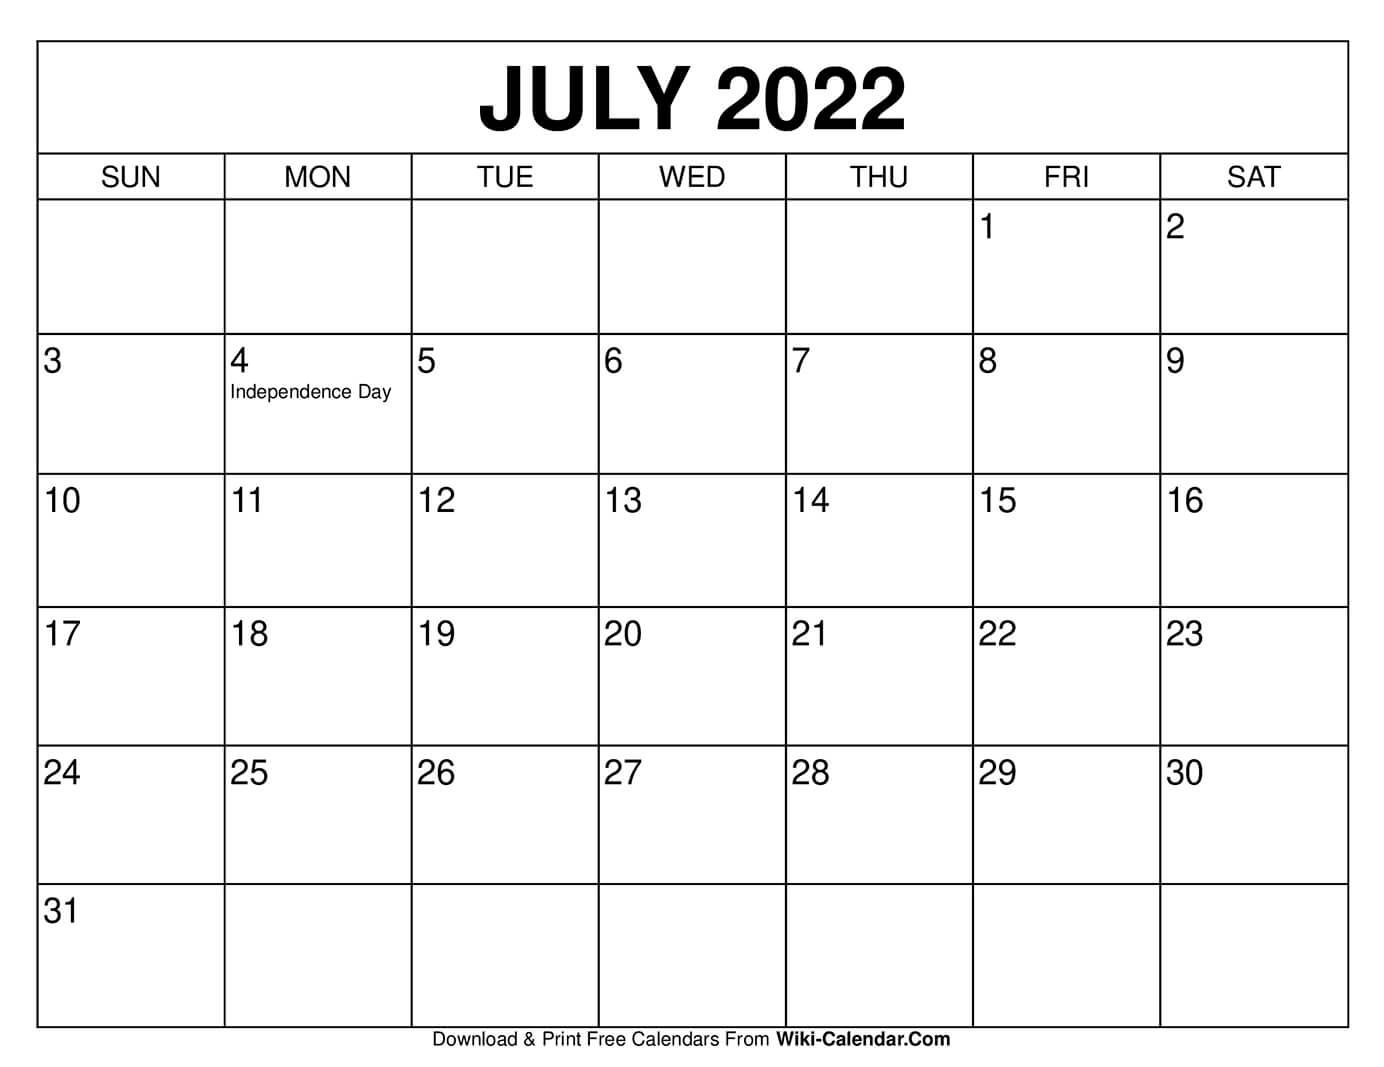 20 2022 calendar australia free download printable 1